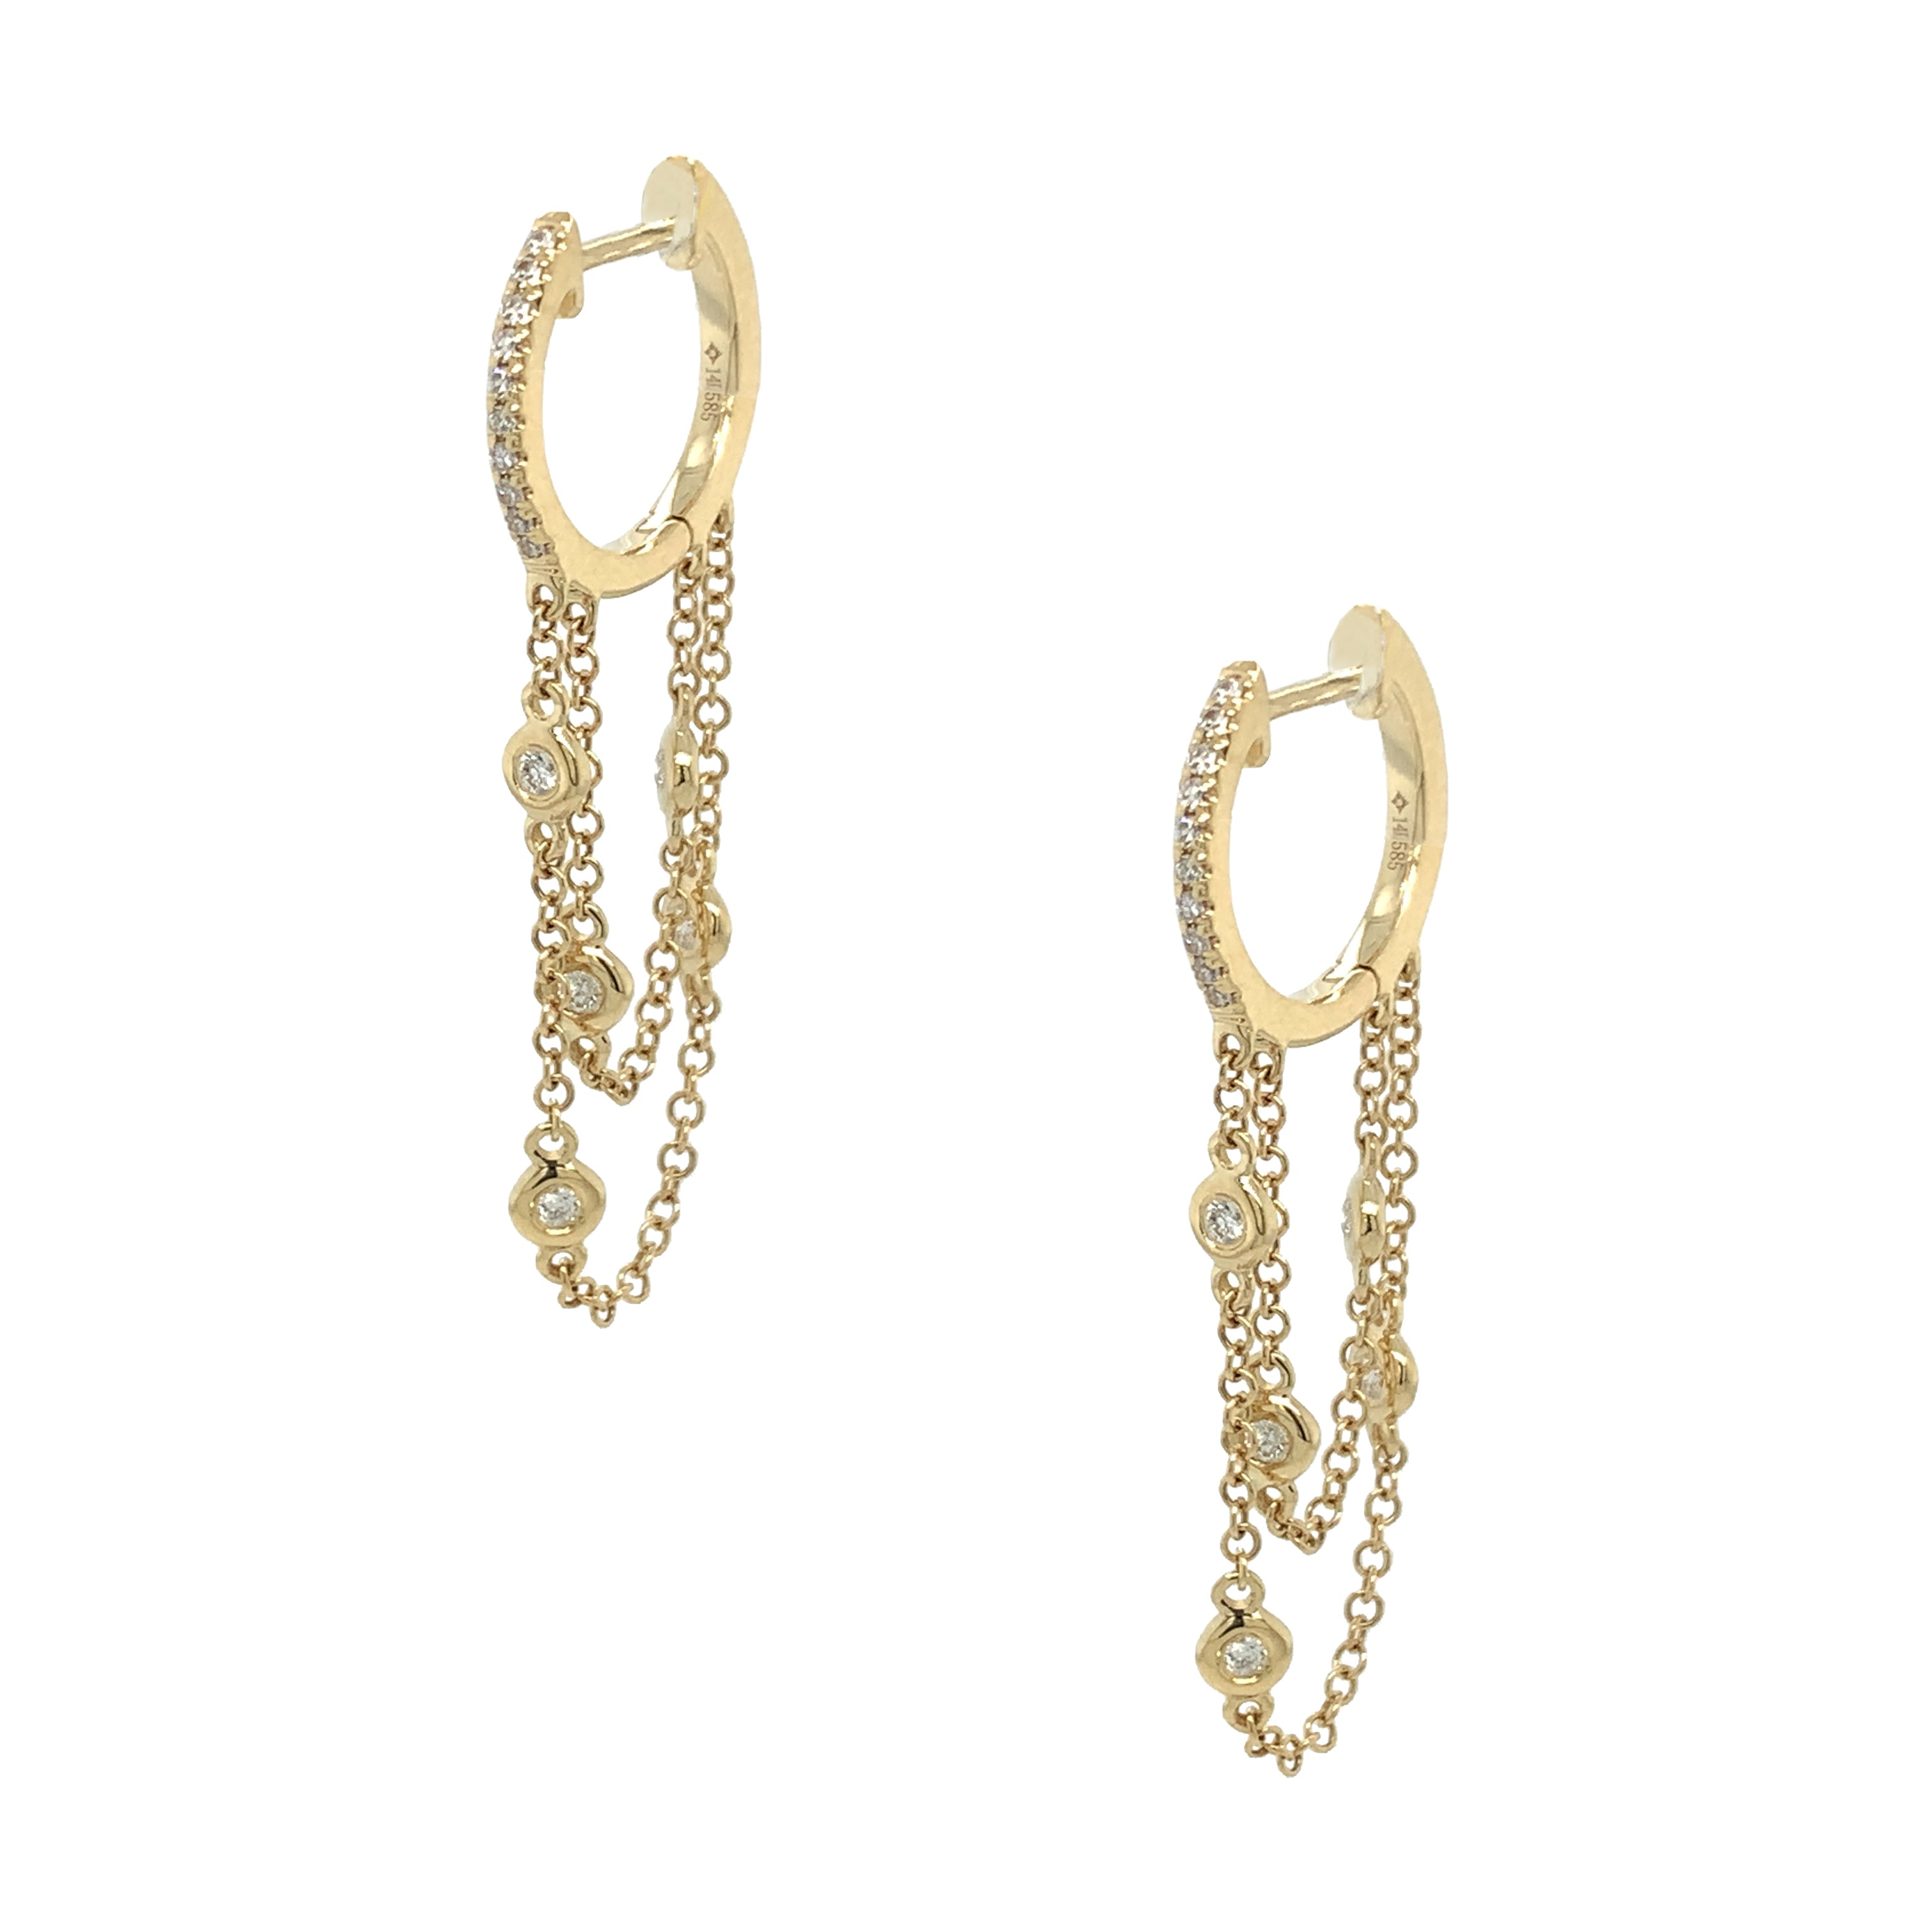 10K Yellow Gold Dainty Handcuff Earrings Double Piercing Huggies Hoop  Earrings 11x11 Women's Ladies Hoop Chain Earrings Connected Earrings -  Walmart.com